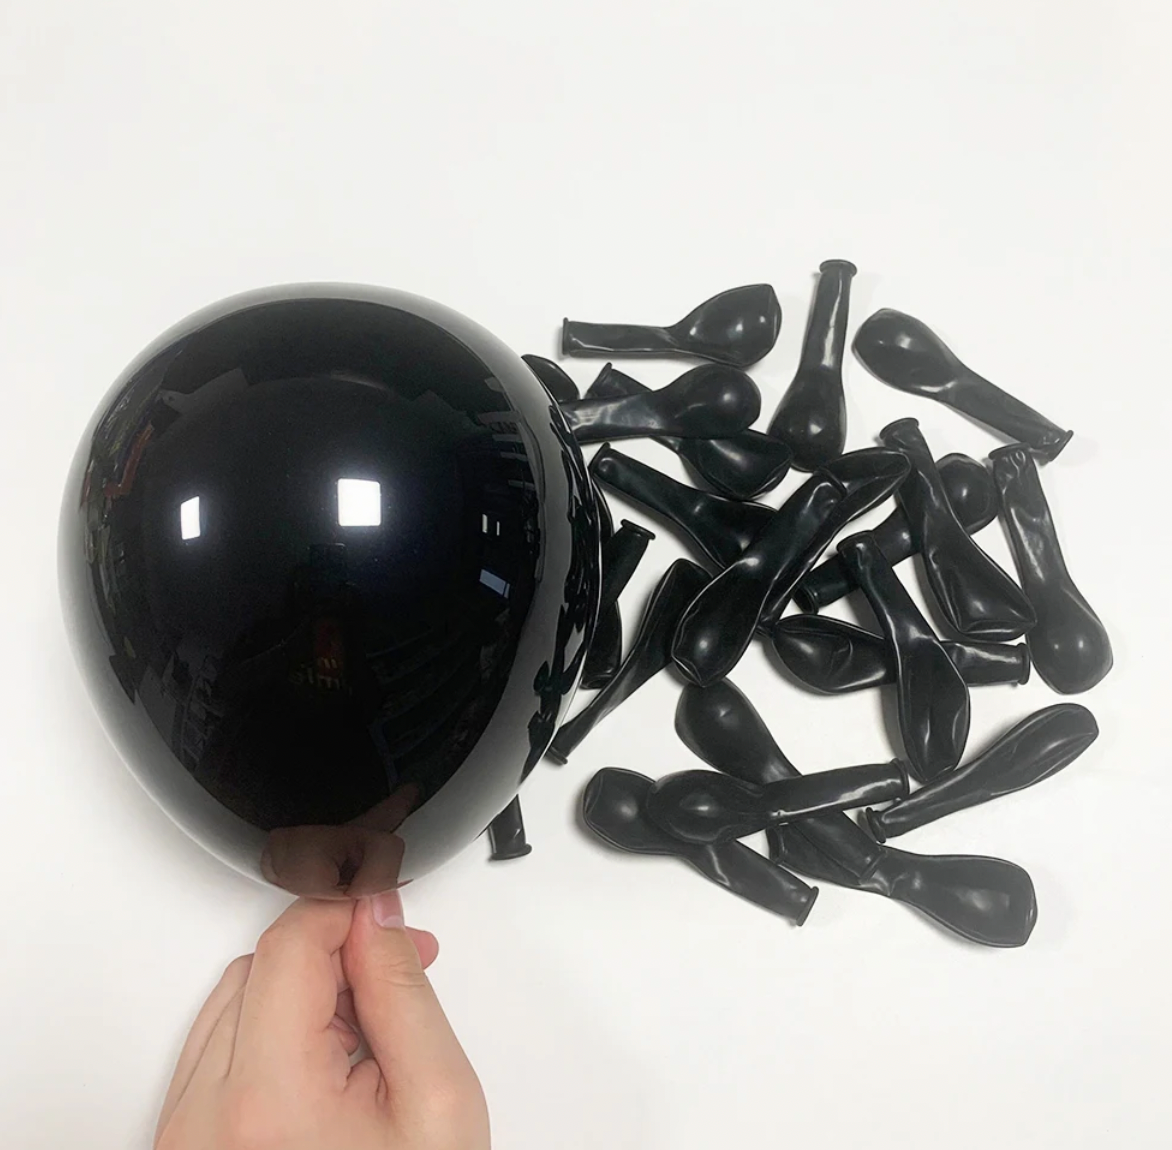 126Pcs Black And Chrome Metallic Silver And Confetti Balloon Garland Arch Kit Bundle Latex Decoration